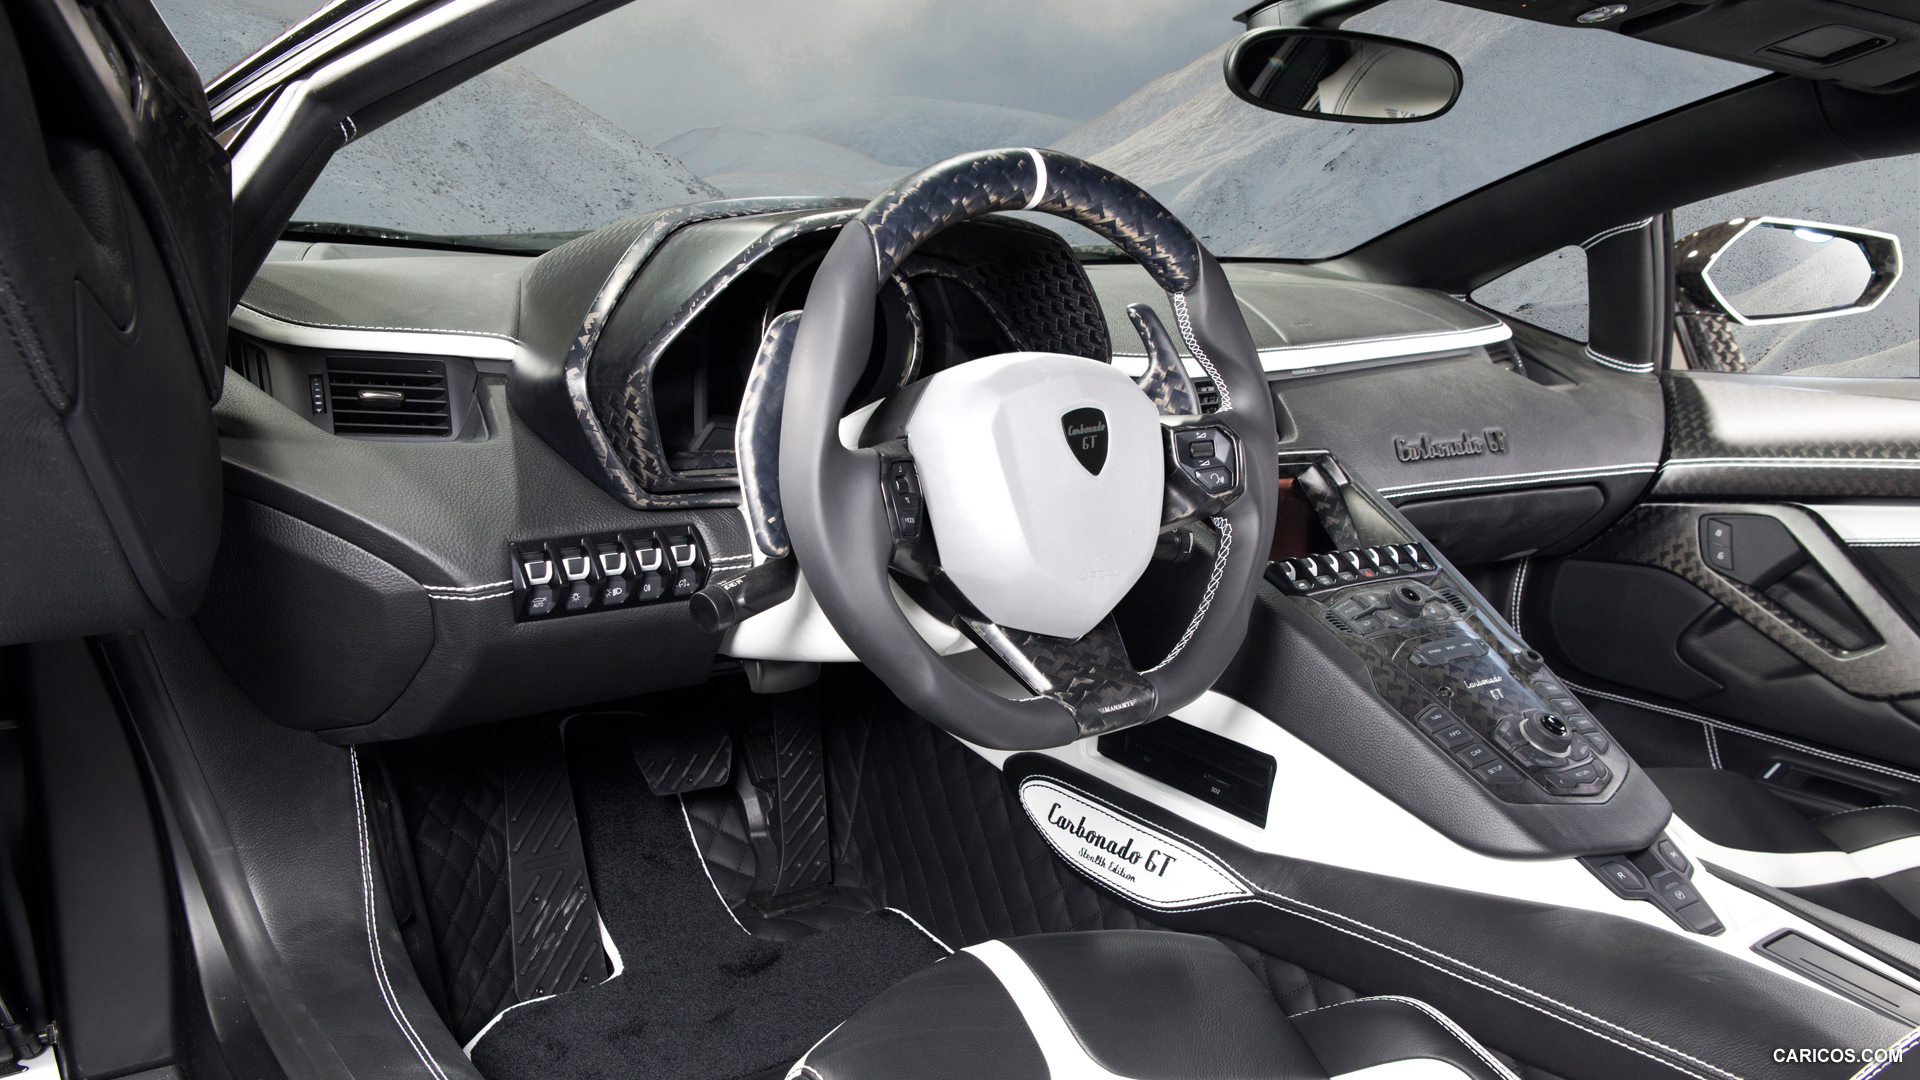 2014 Mansory Carbonado GT based on Lamborghini Aventador  - Interior, #3 of 8